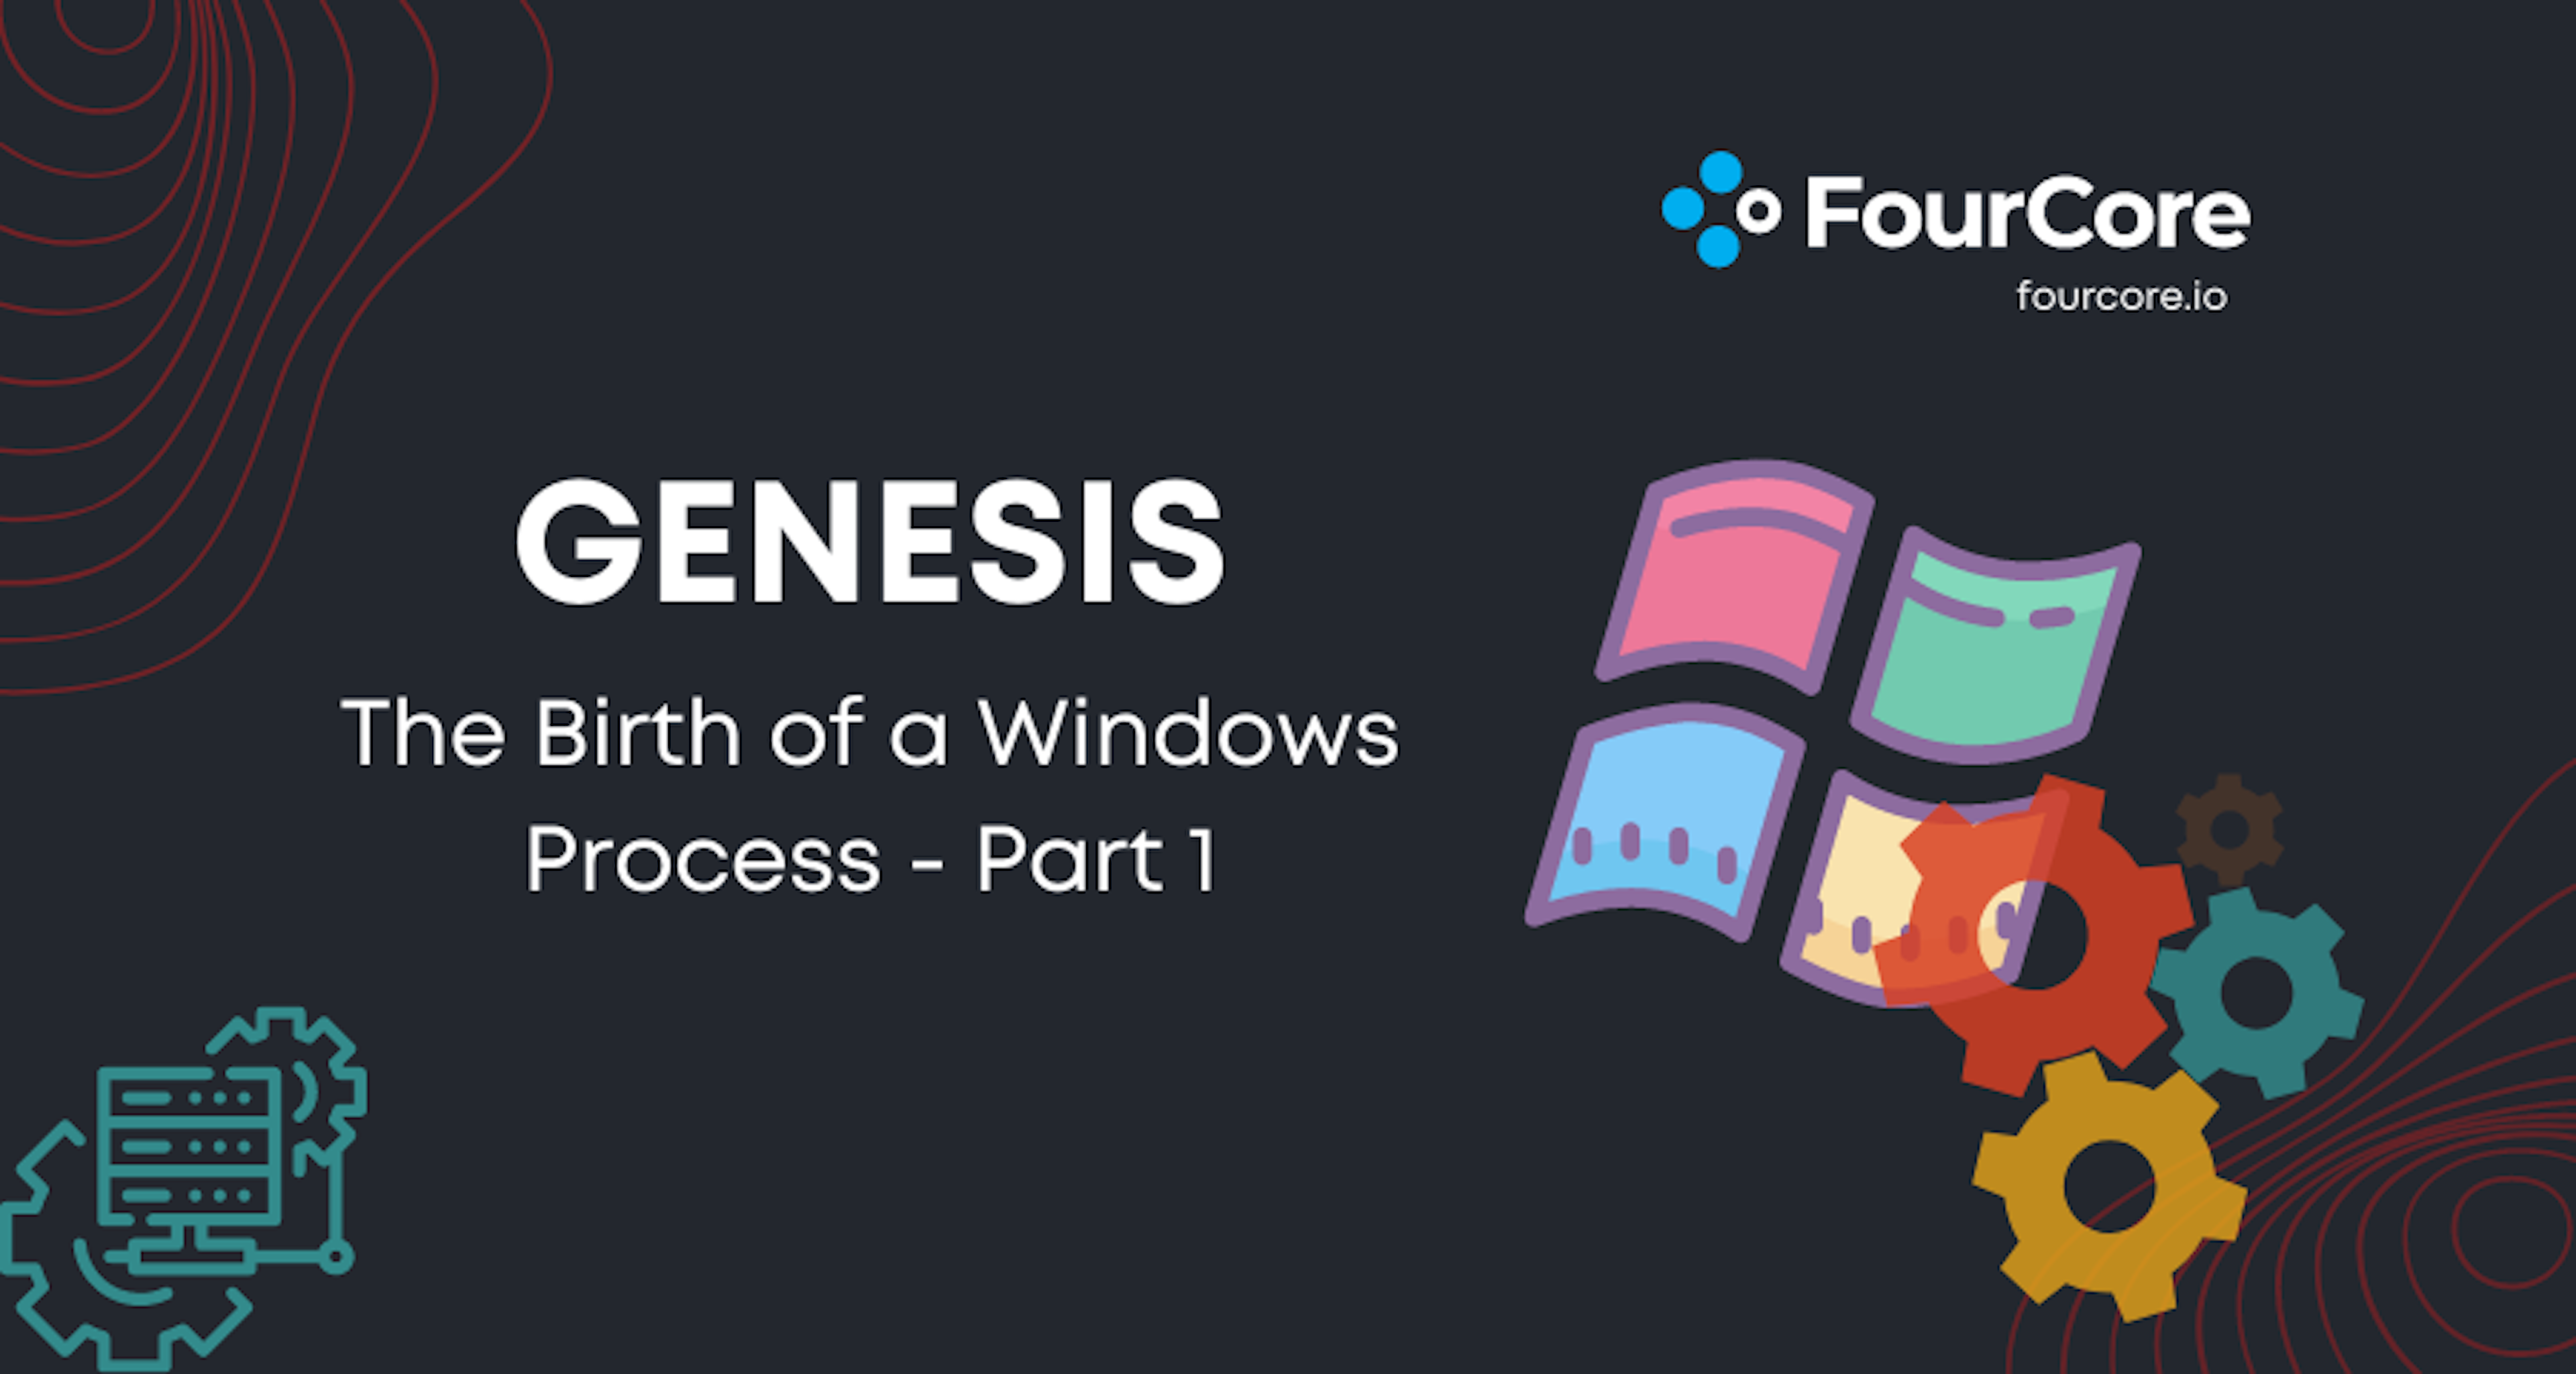 Genesis - The Birth of a Windows Process (Part 1) Blog Post Image